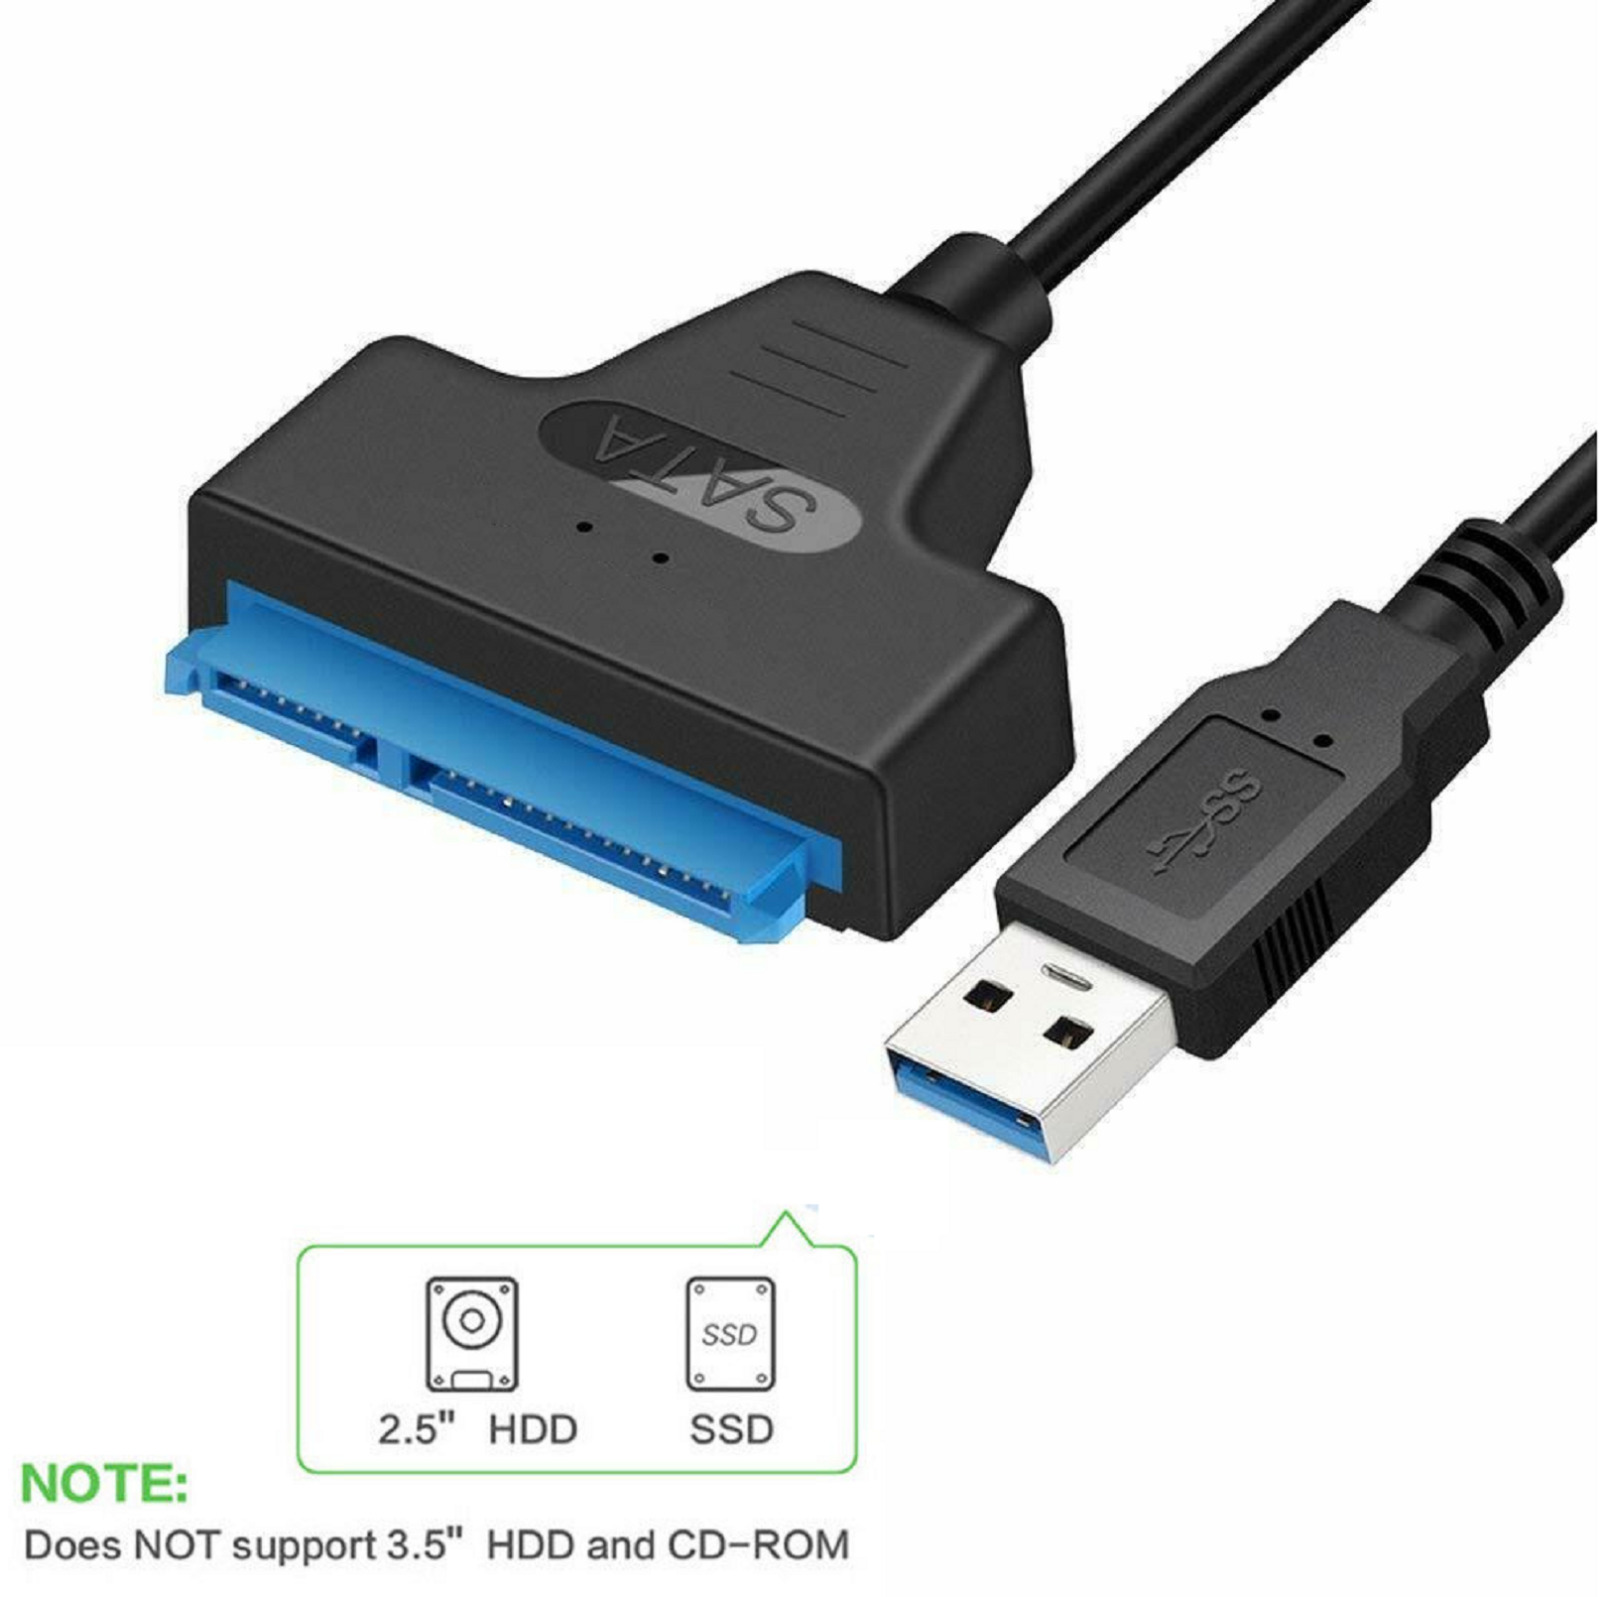 25 X USB 3.0 to 2.5 SATA III Hard Drive Adapter UASP SATA to USB3.0 Converter